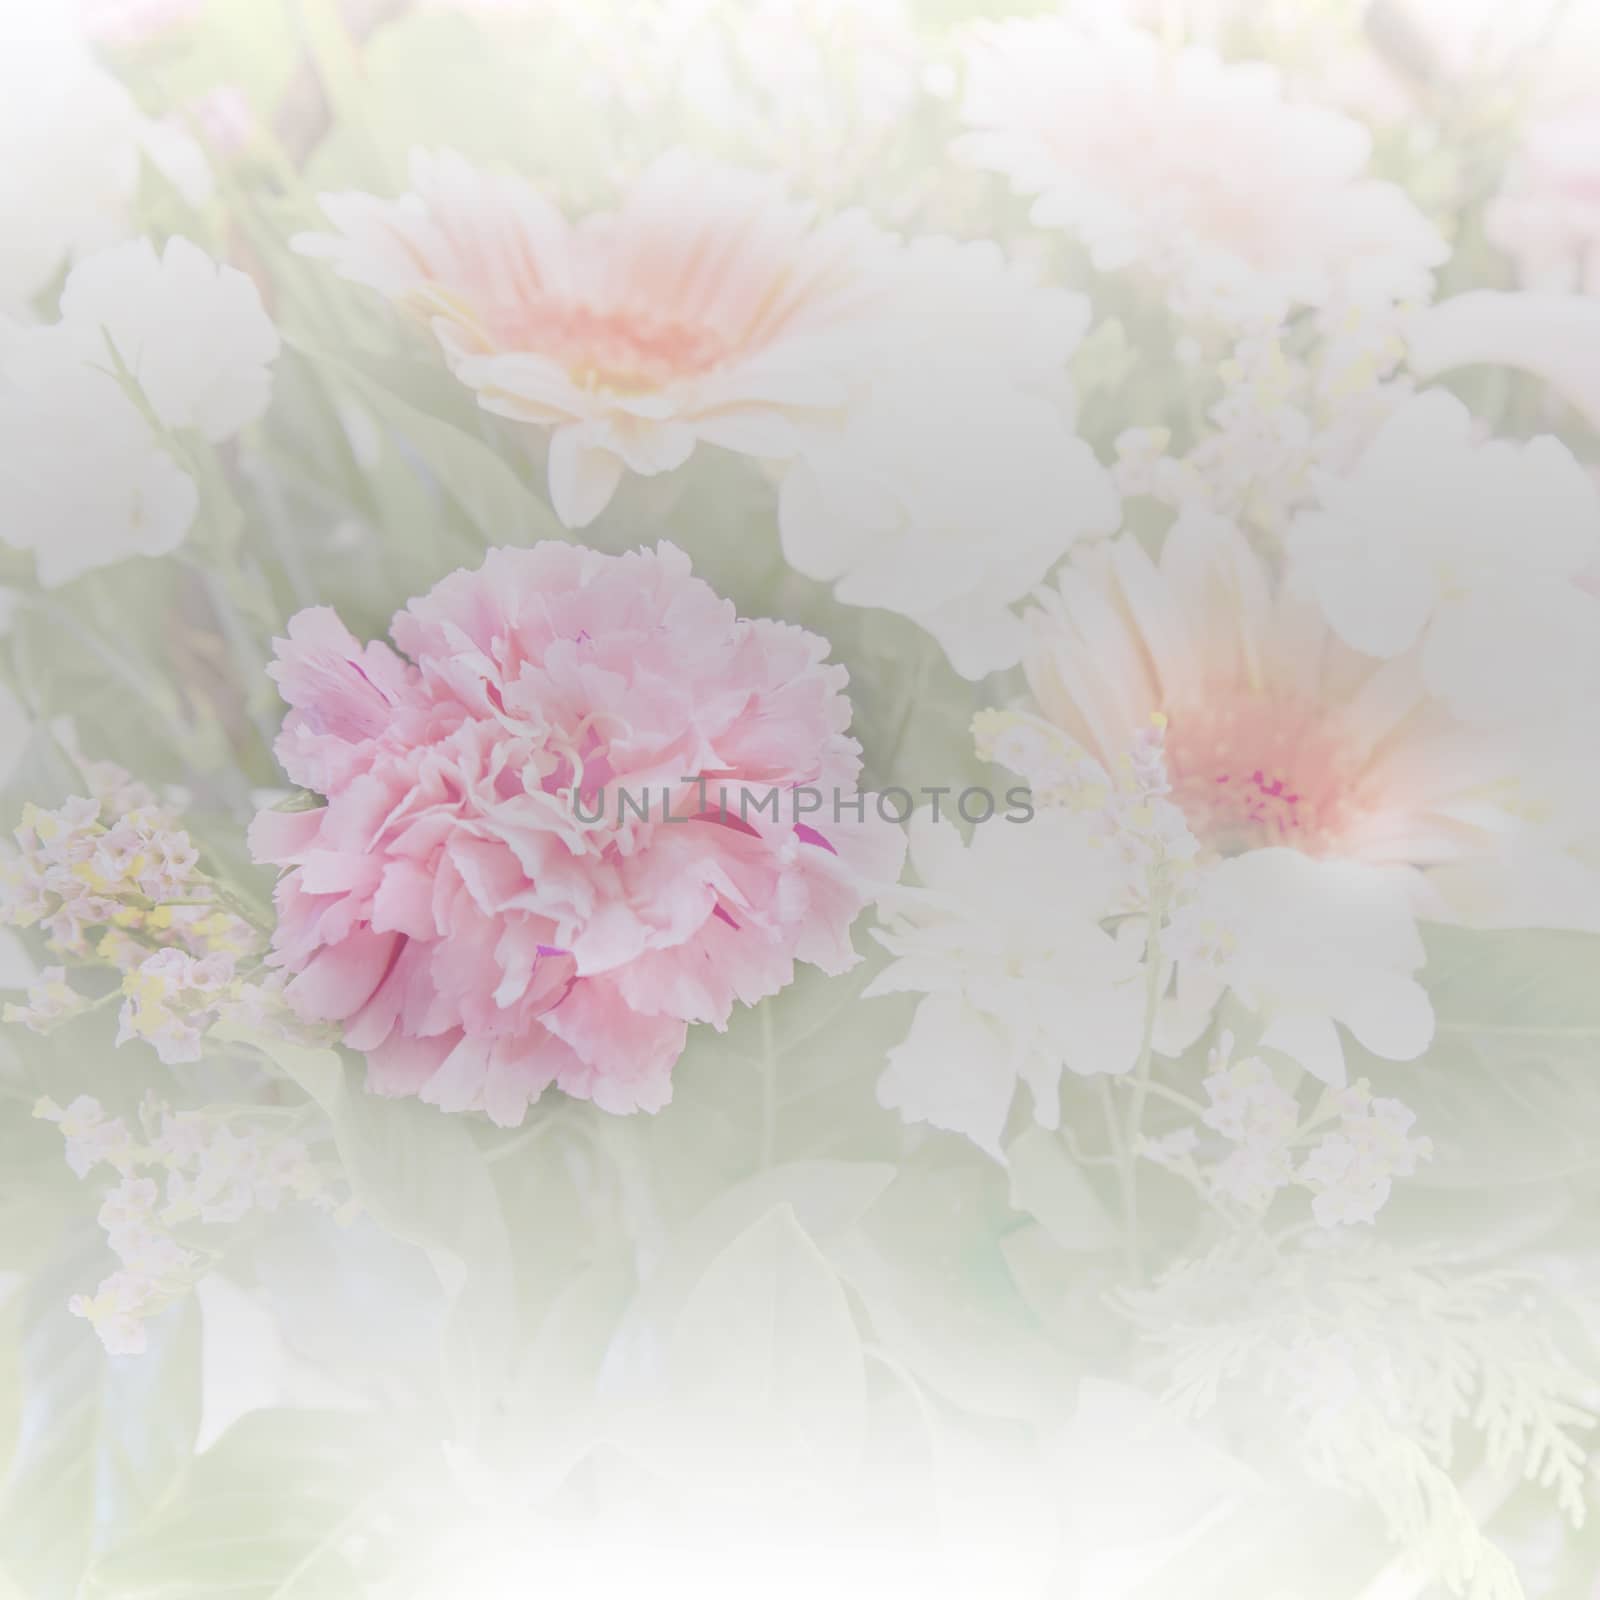 carnations in the morning softlight by amnarj2006